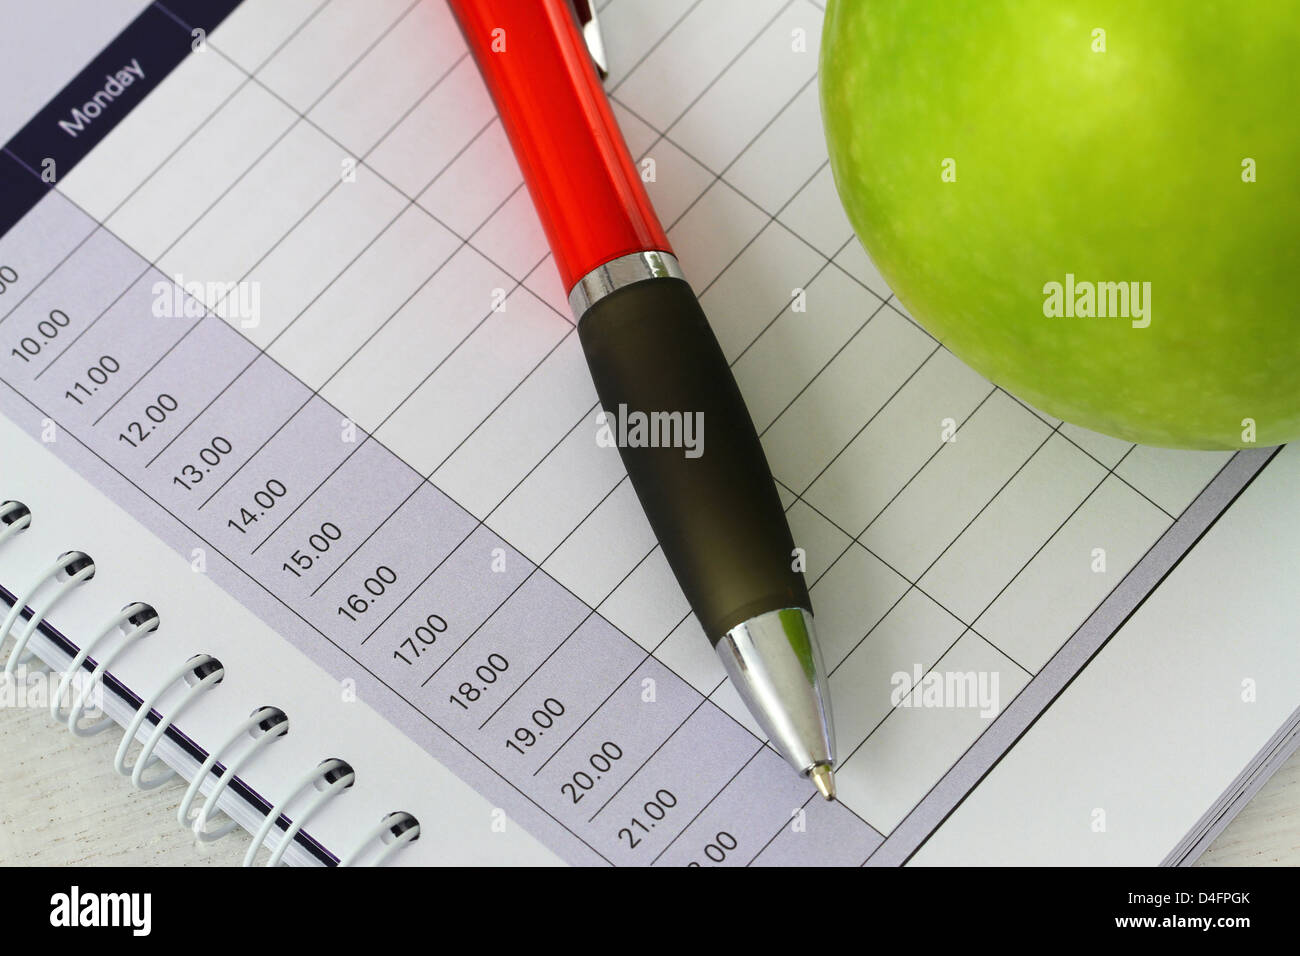 Open empty agenda, pen and green apple Stock Photo